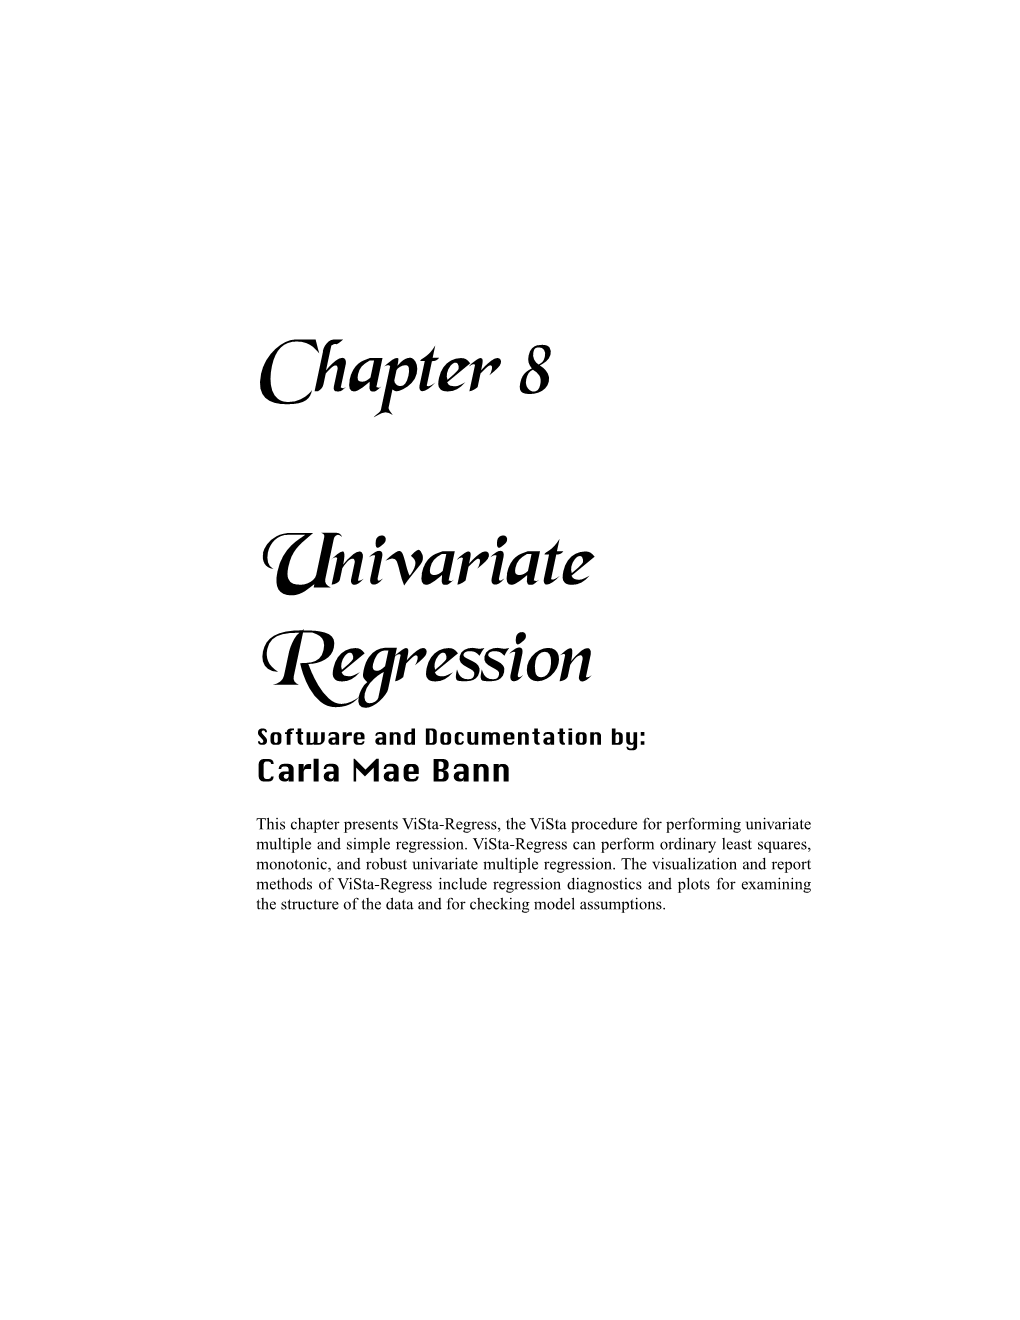 Chapter 8 Univariate Regression